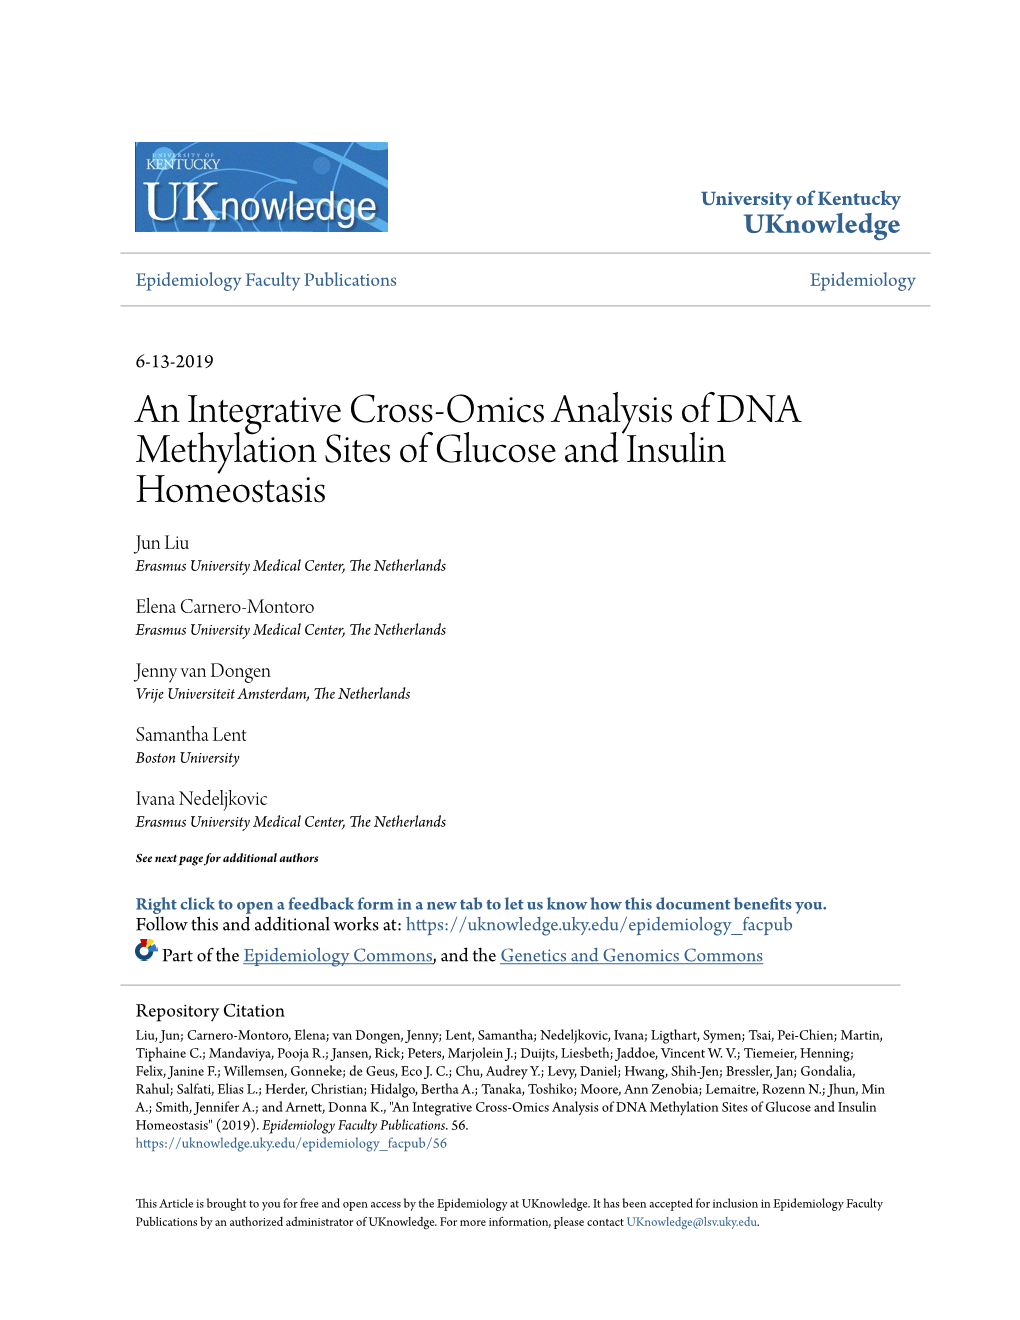 An Integrative Cross-Omics Analysis of DNA Methylation Sites of Glucose and Insulin Homeostasis Jun Liu Erasmus University Medical Center, the Netherlands